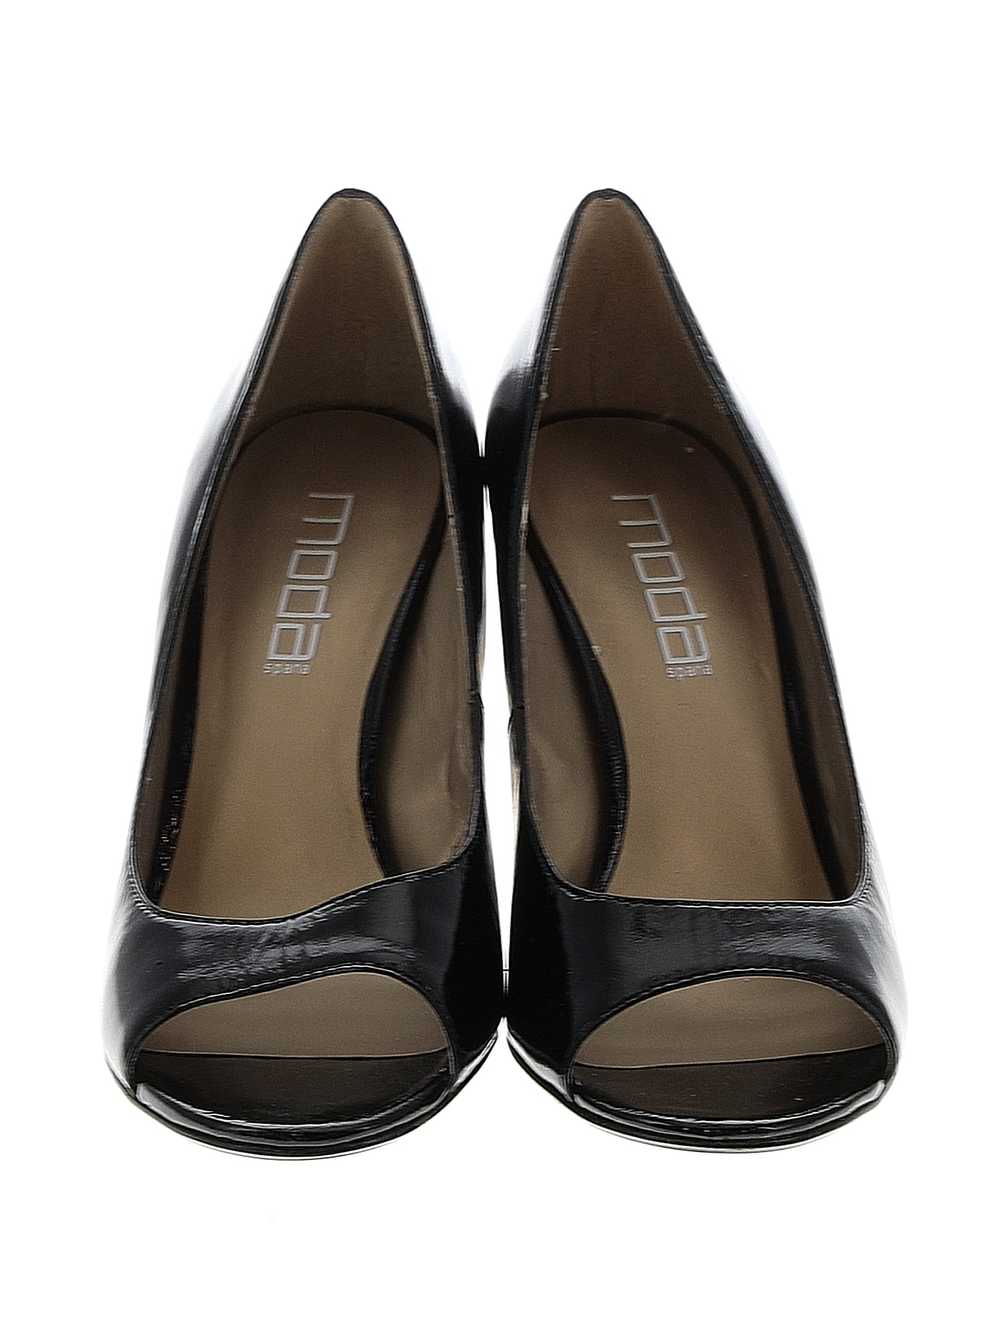 Moda Spana Women Black Heels 7.5 - image 2